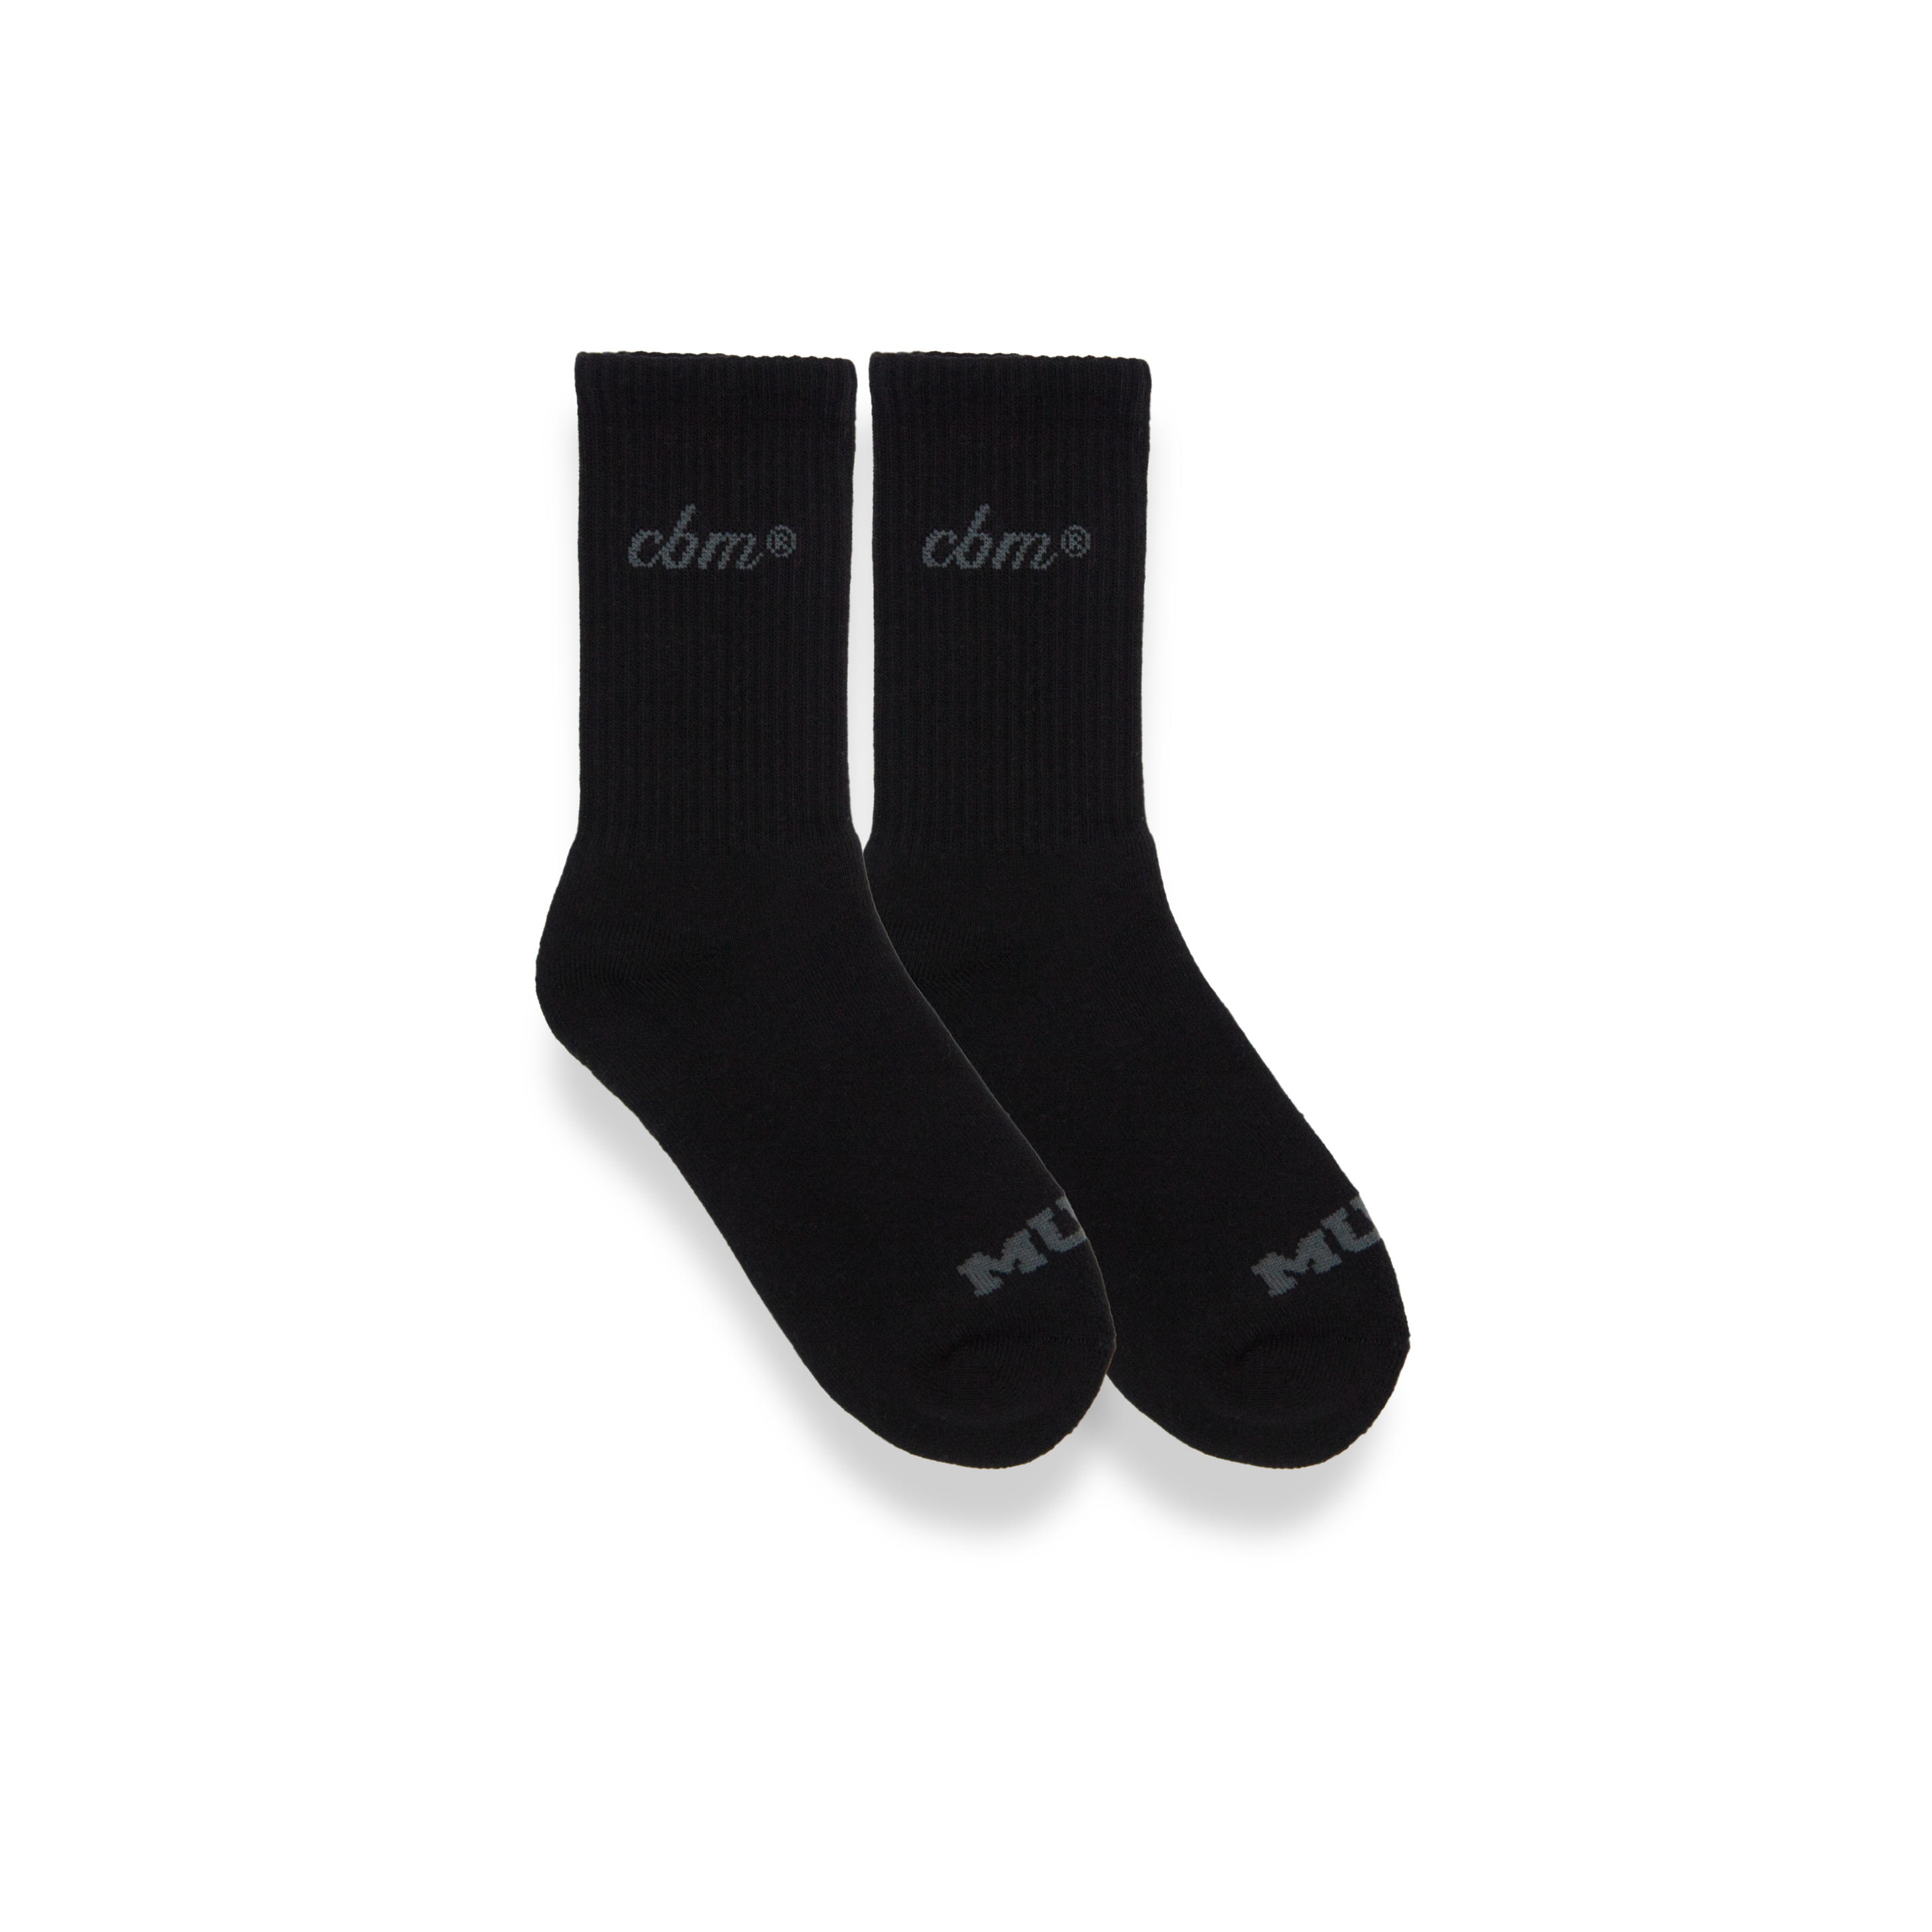 Crew socks 6" - Black